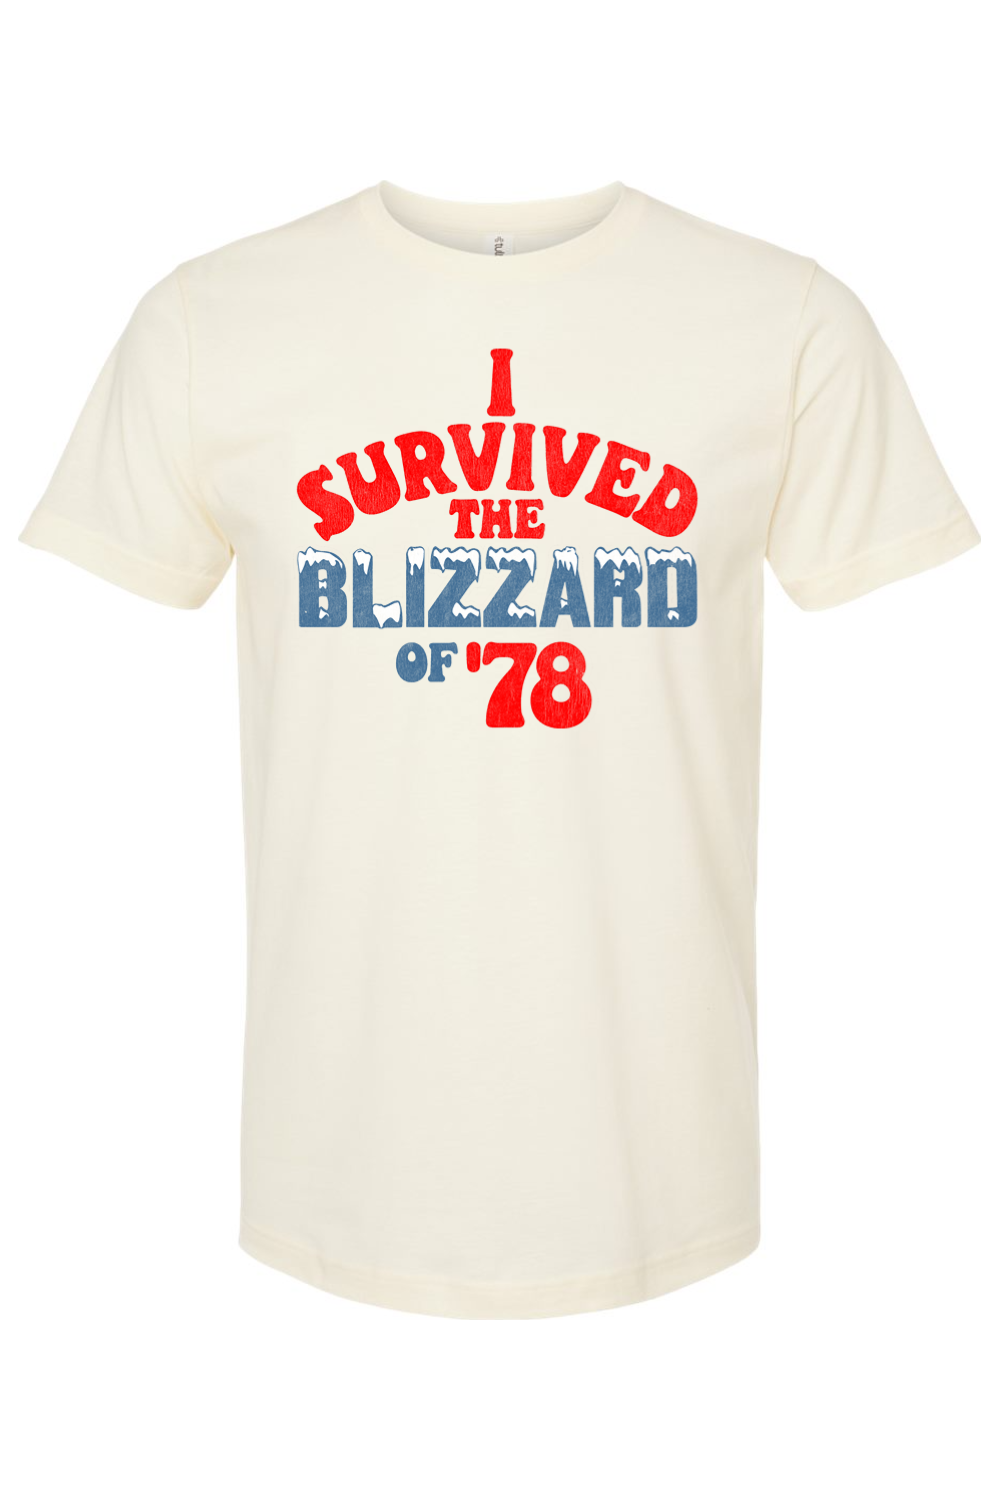 I Survived the Blizzard of '78 - Yinzylvania